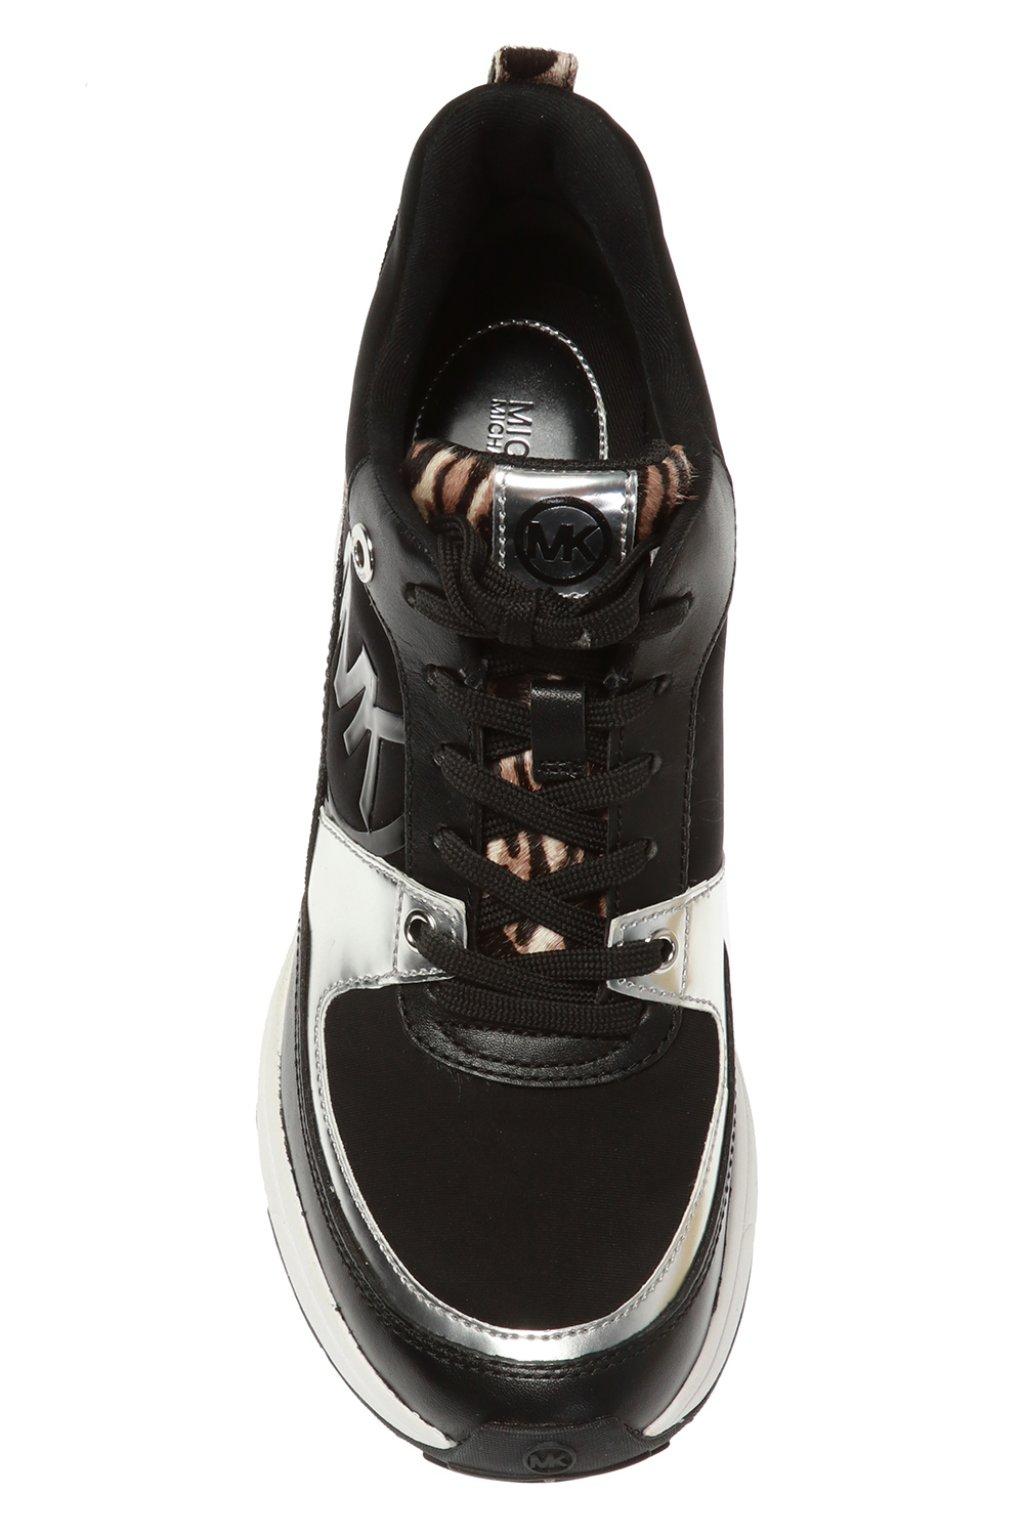 Michael Kors Leather 'mickey' Sneakers in Black - Lyst